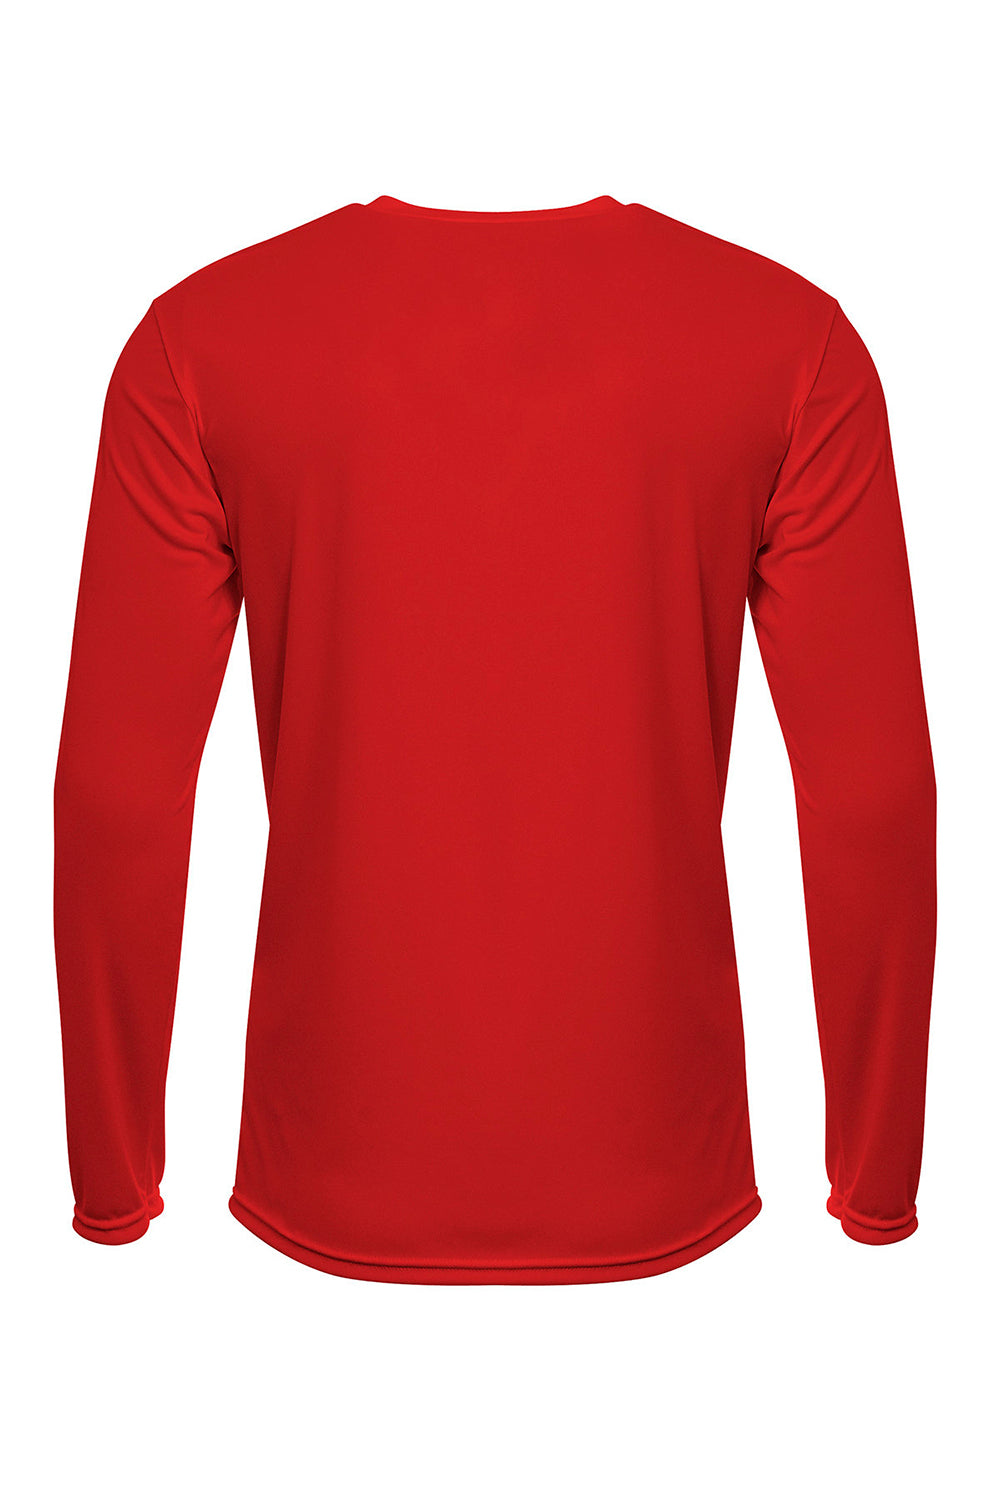 A4 N3425 Mens Sprint Moisture Wicking Long Sleeve Crewneck T-Shirt Scarlet Red Flat Back